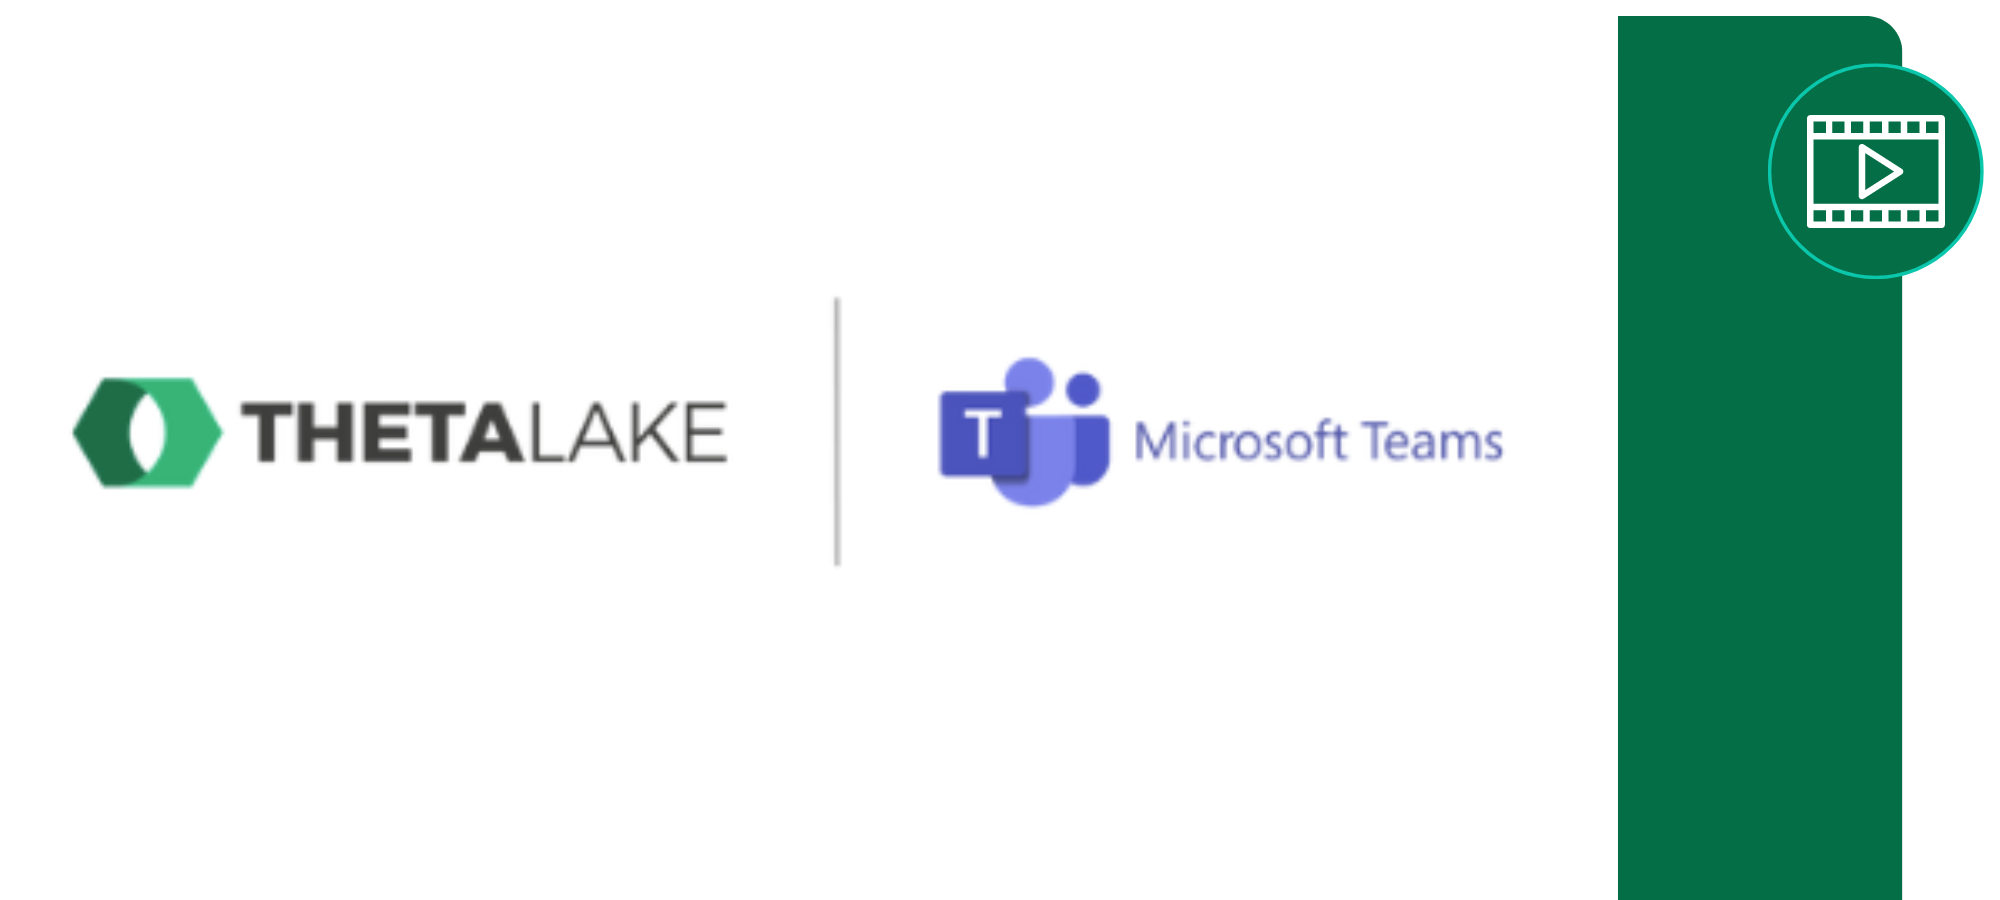 Video MicrosoftTeams ThetaLake Watch